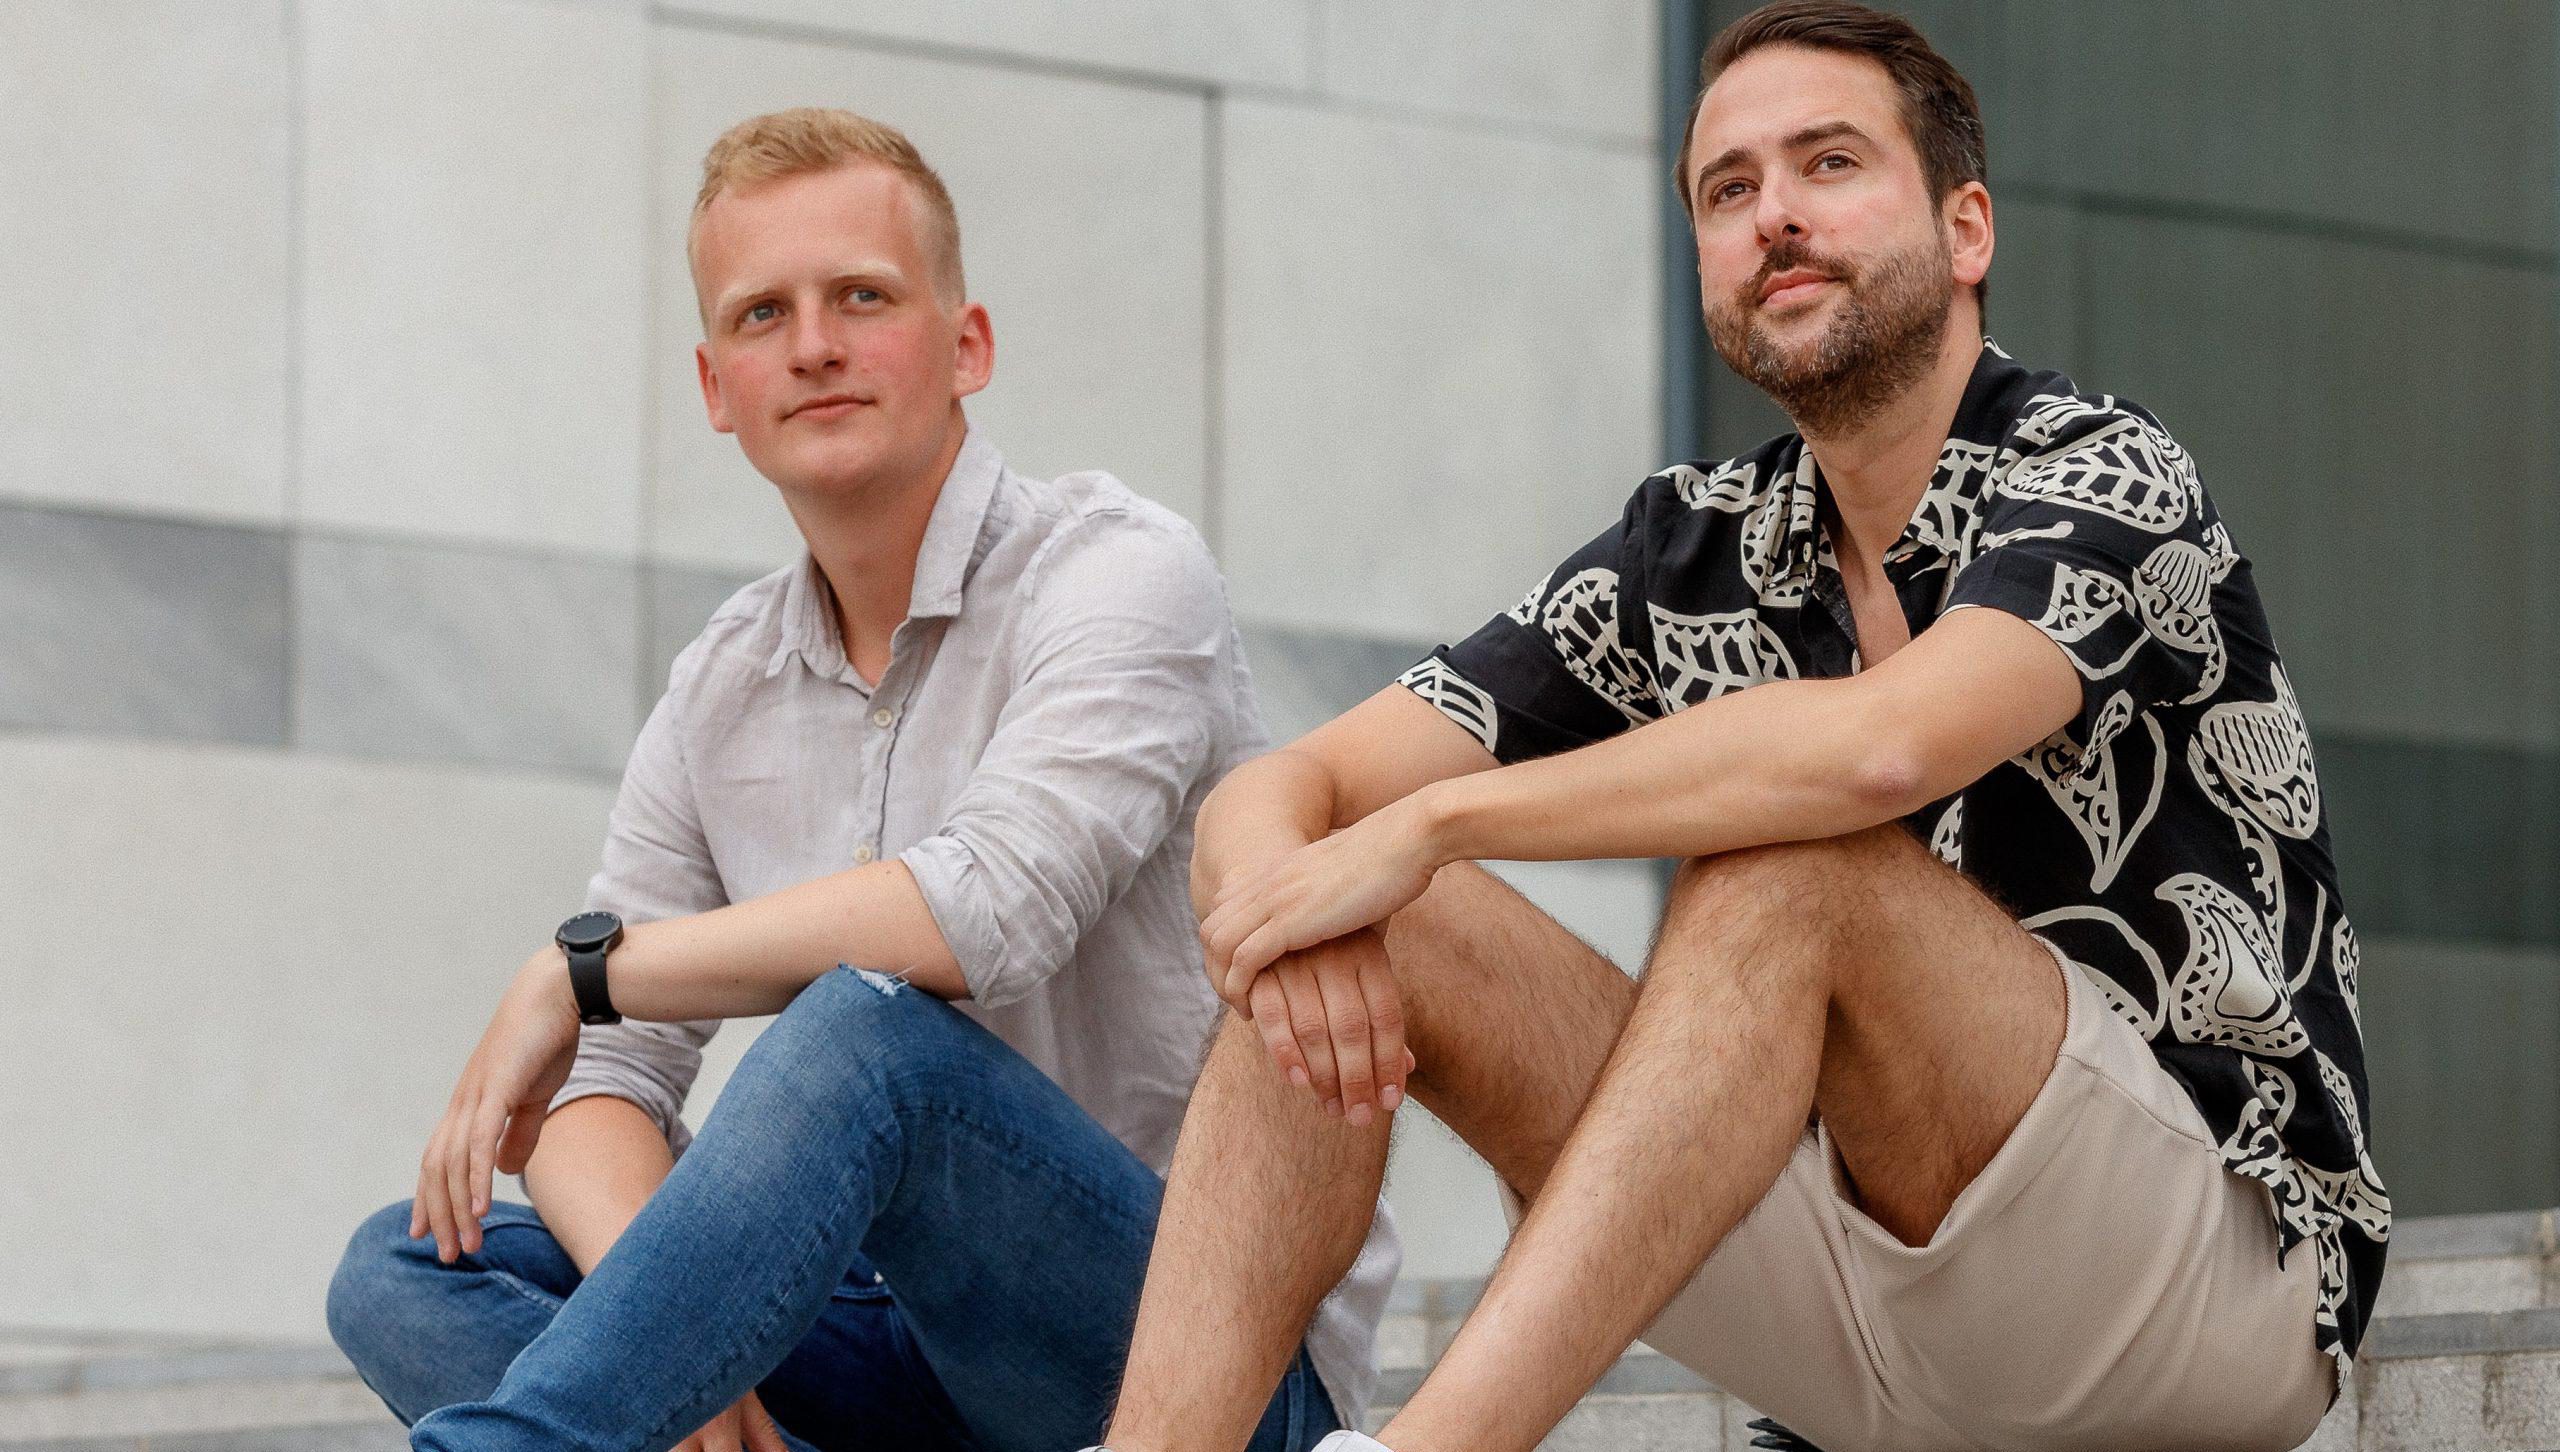 Music producer Lars Cohorn aims to win Belgium’s biggest music award